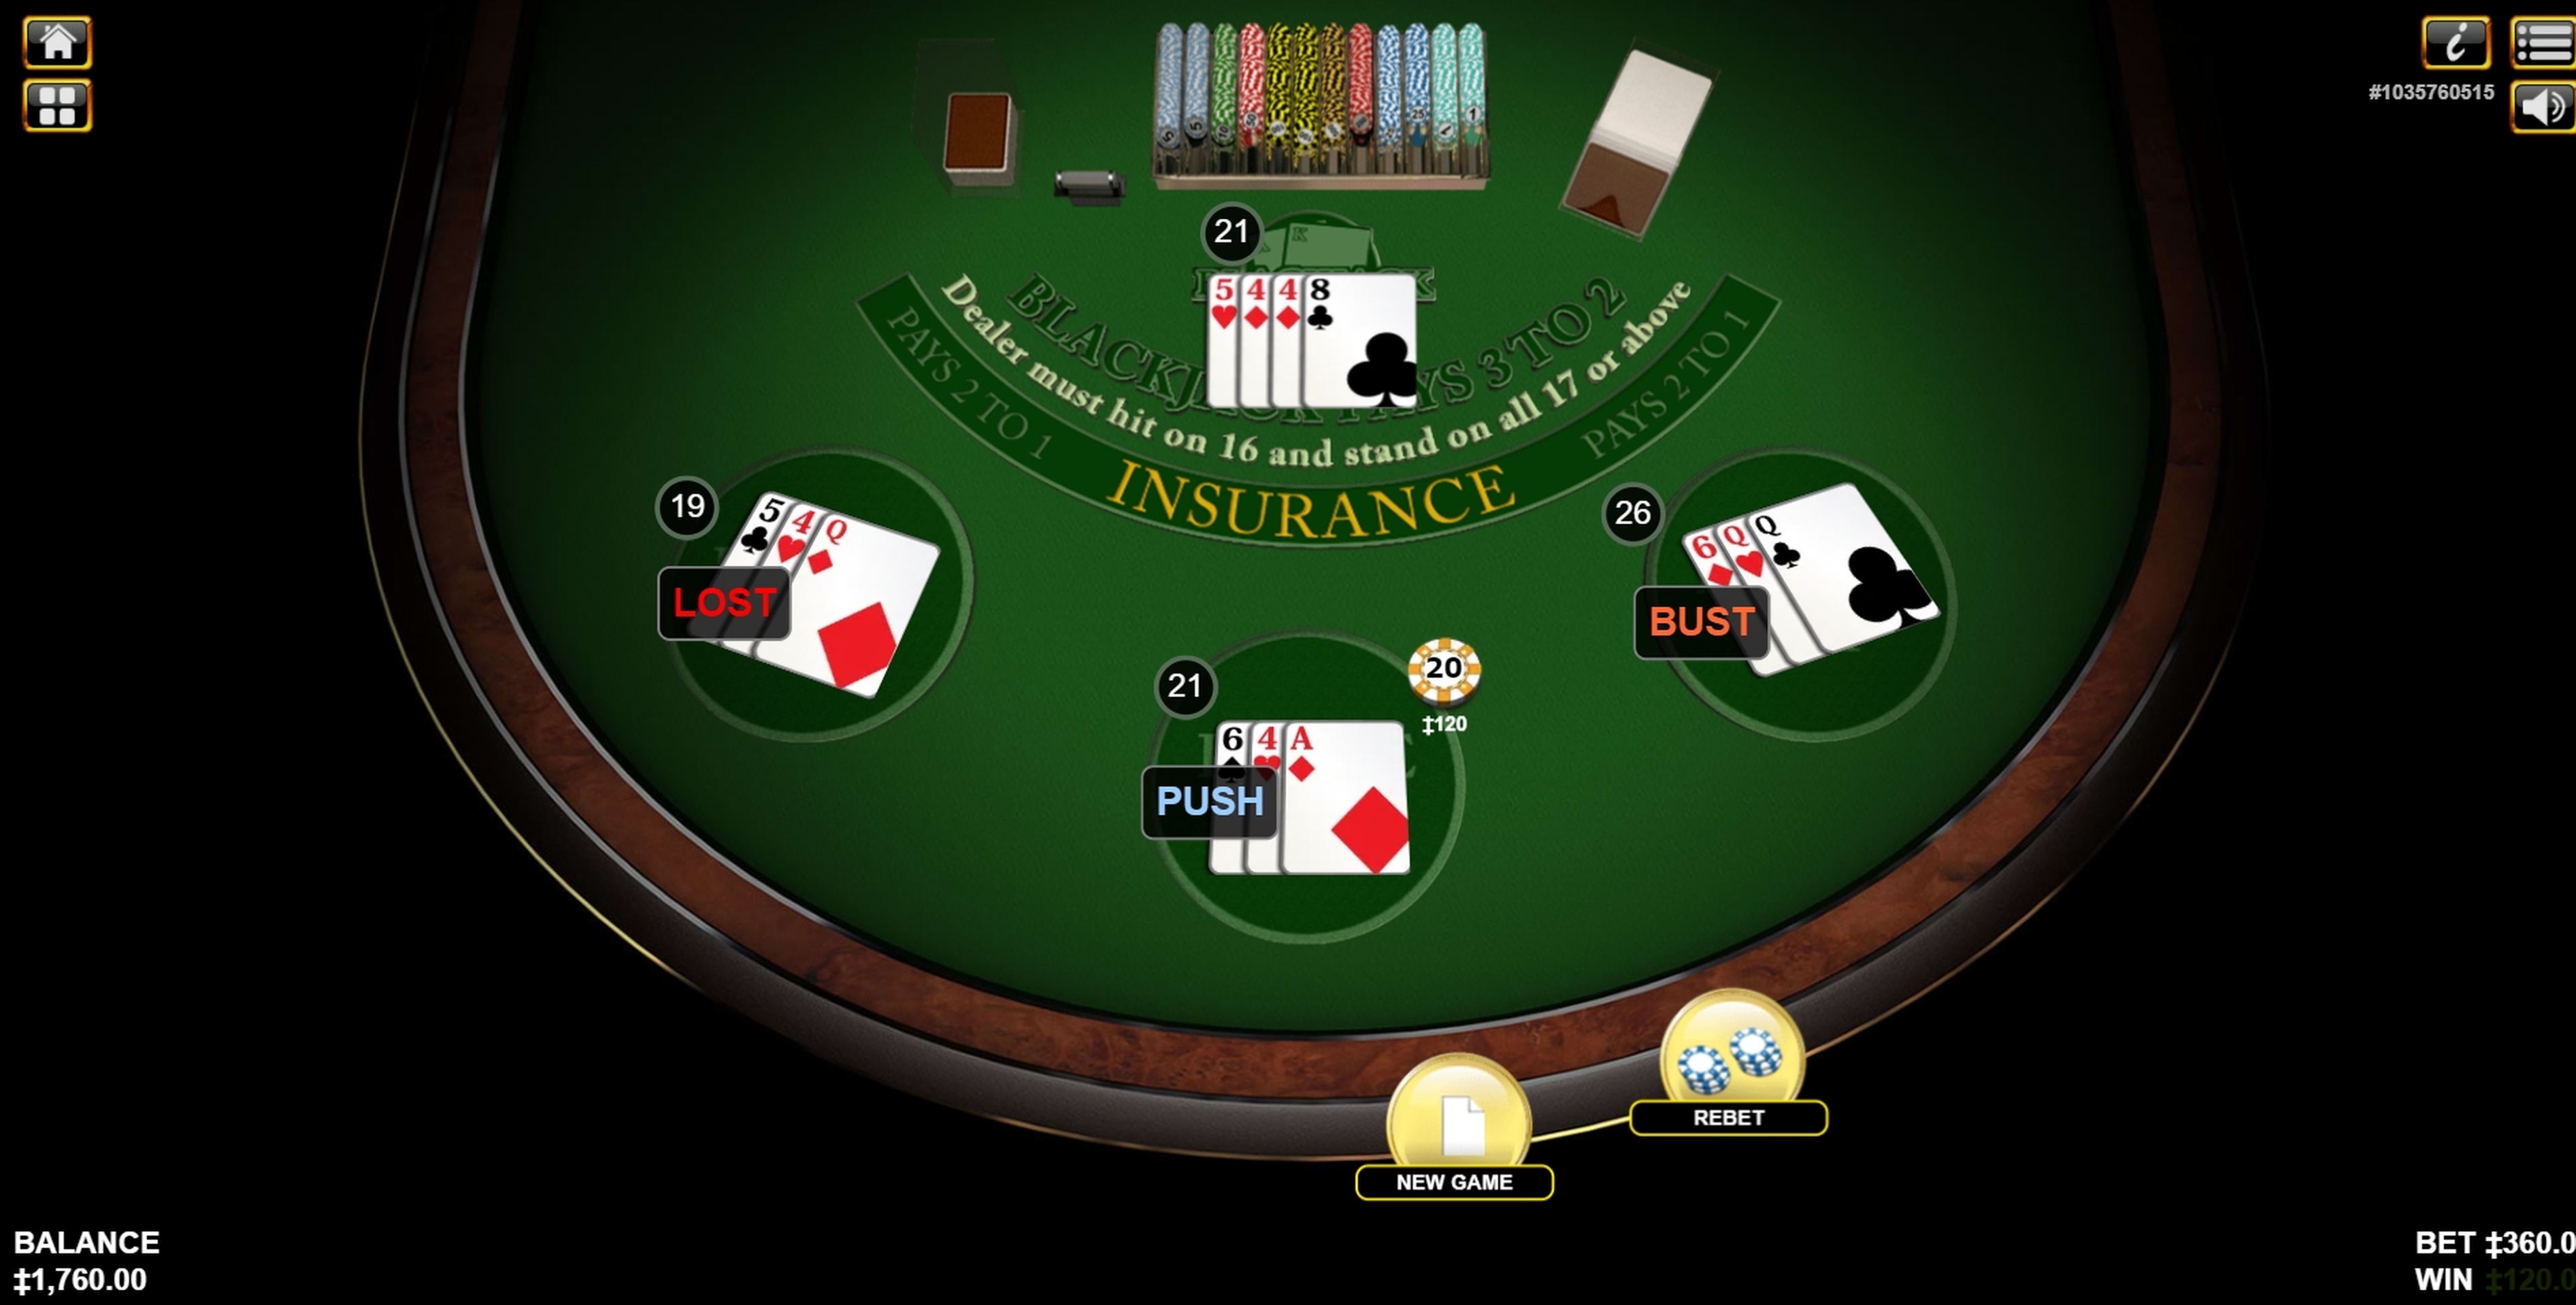 Win Money in Blackjack 3 Hand Free Slot Game by Habanero